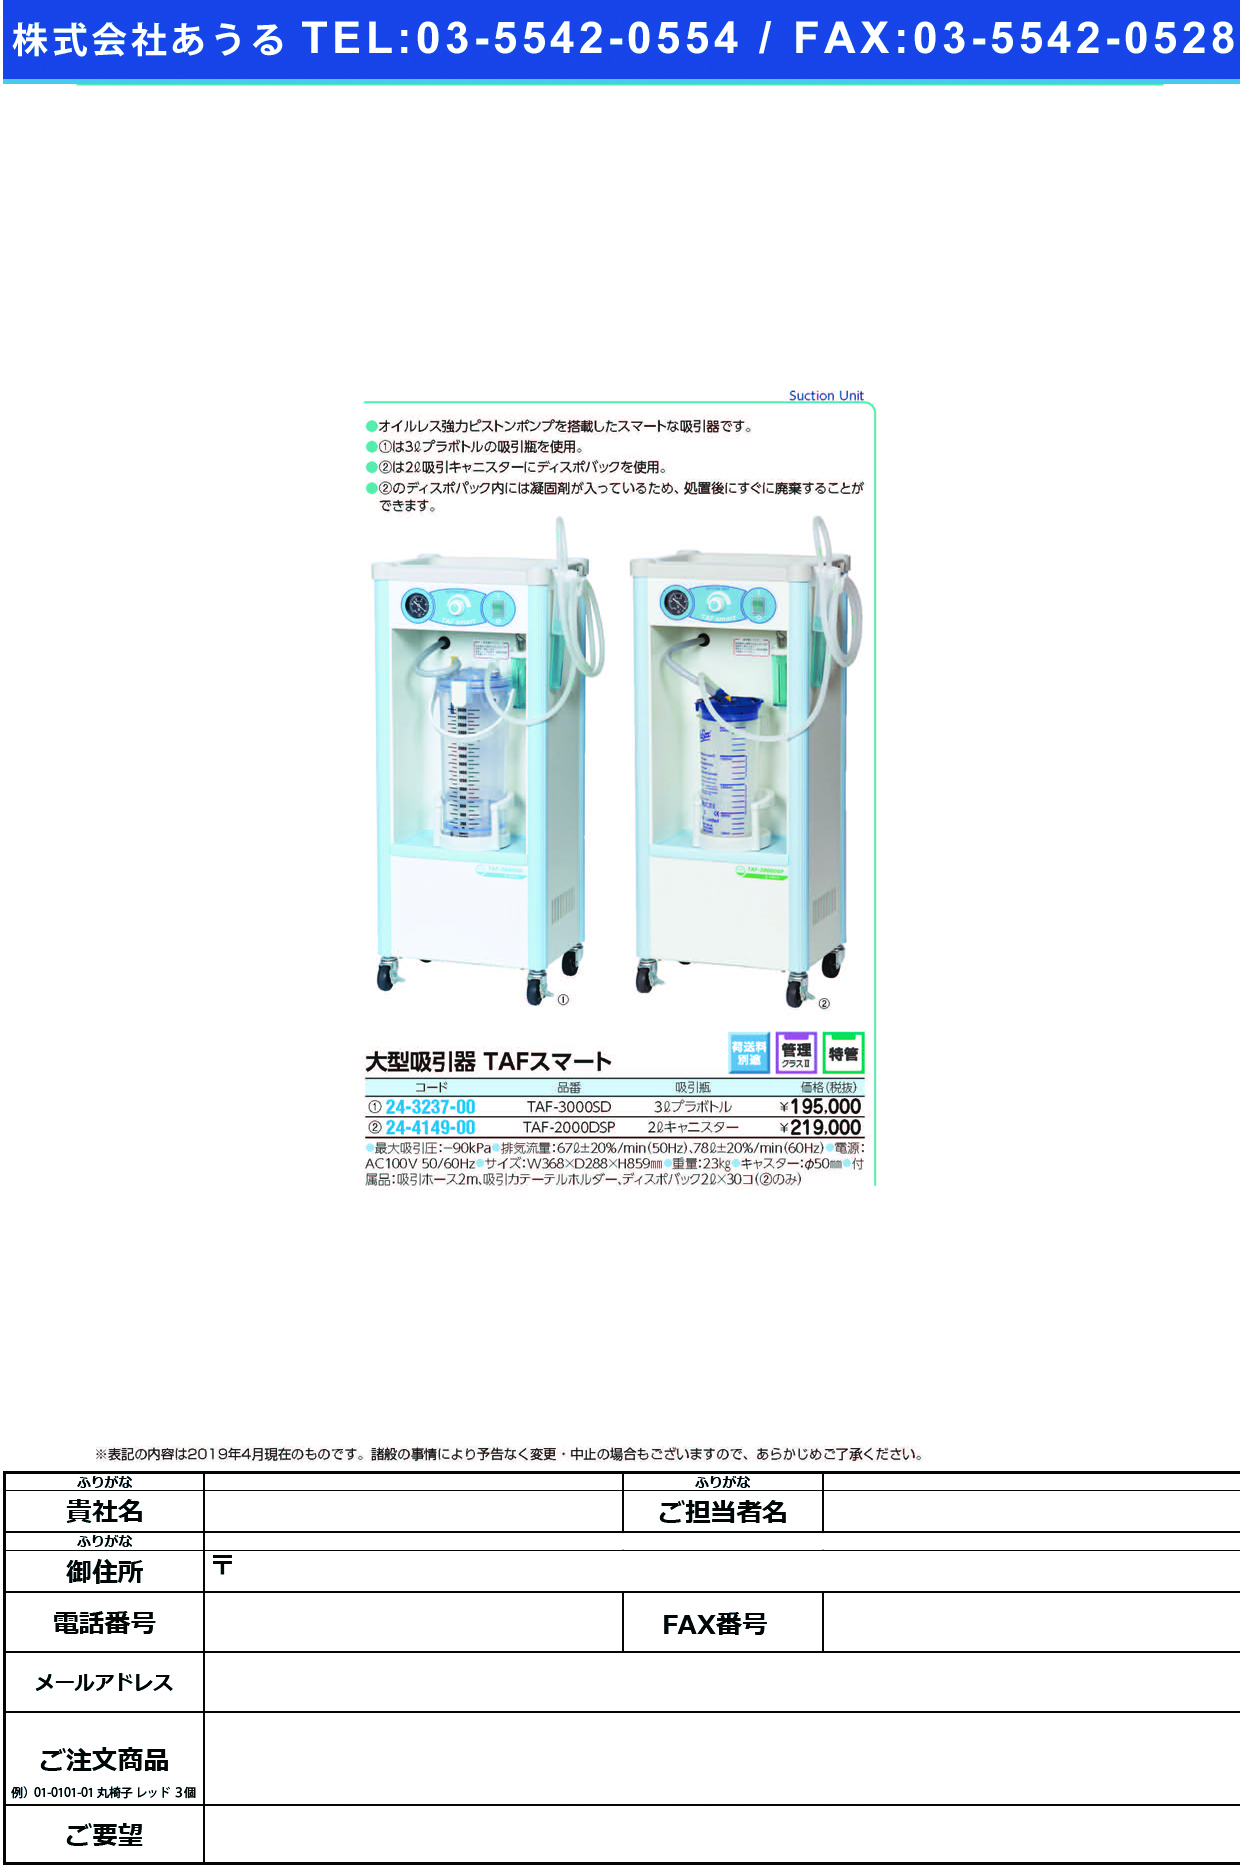 (24-3237-00)大型吸引器ＴＡＦスマート TAF-3000SD ｵｵｶﾞﾀｷｭｳｲﾝｷTAFｽﾏｰﾄ(新鋭工業)【1台単位】【2019年カタログ商品】